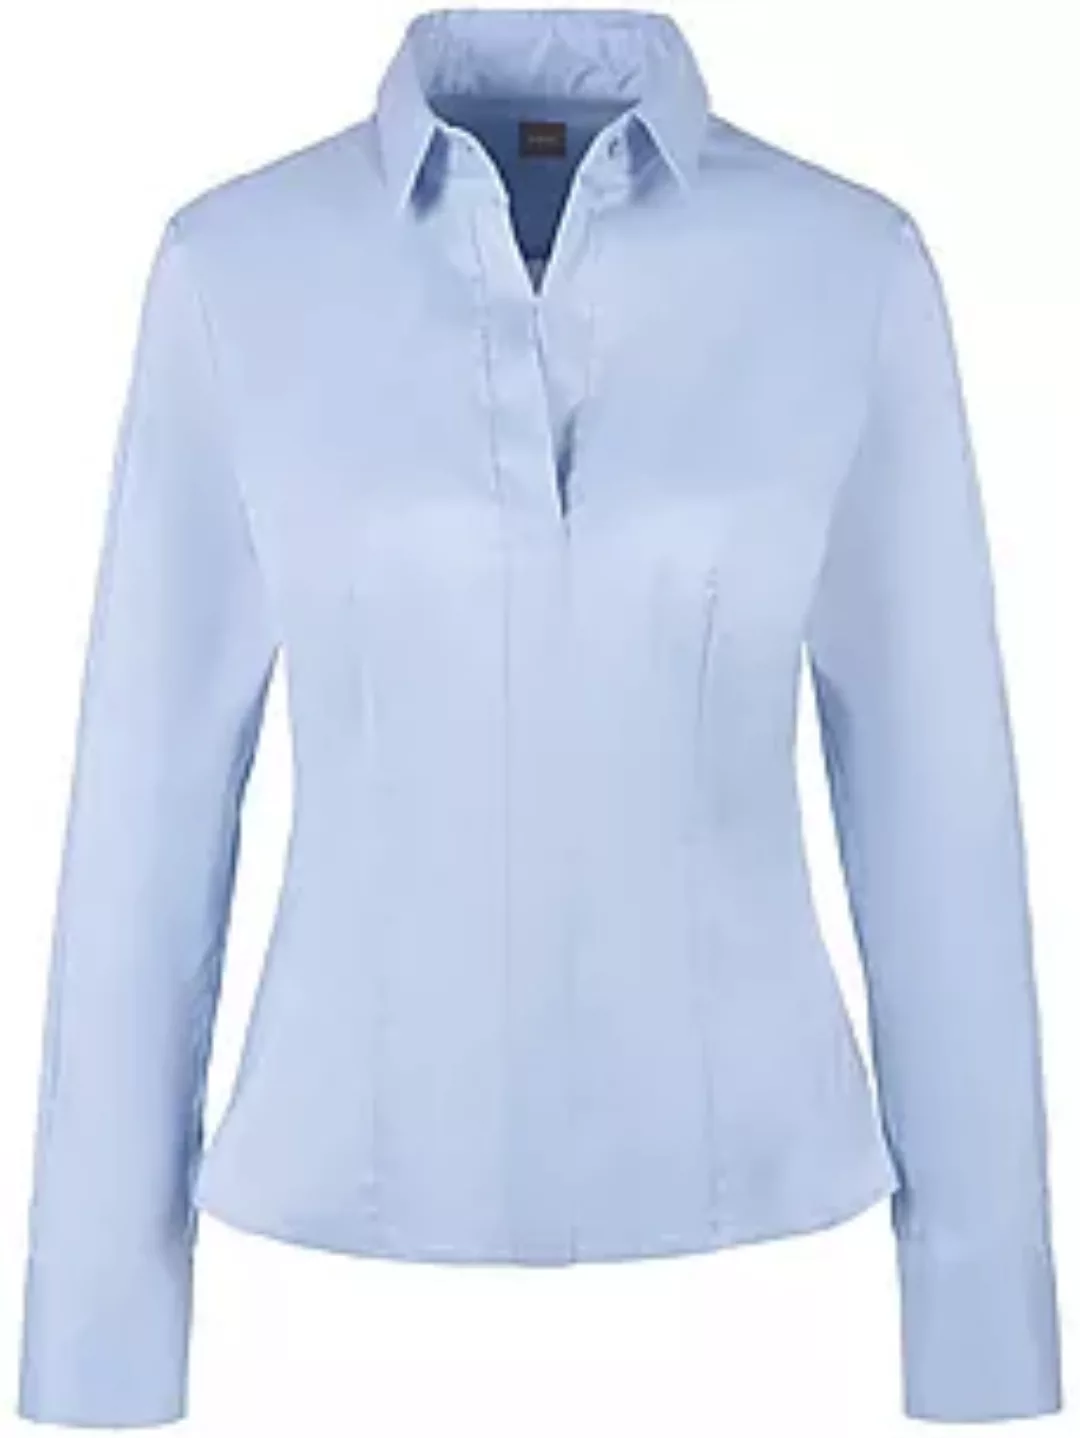 Bluse Bashinah BOSS blau günstig online kaufen